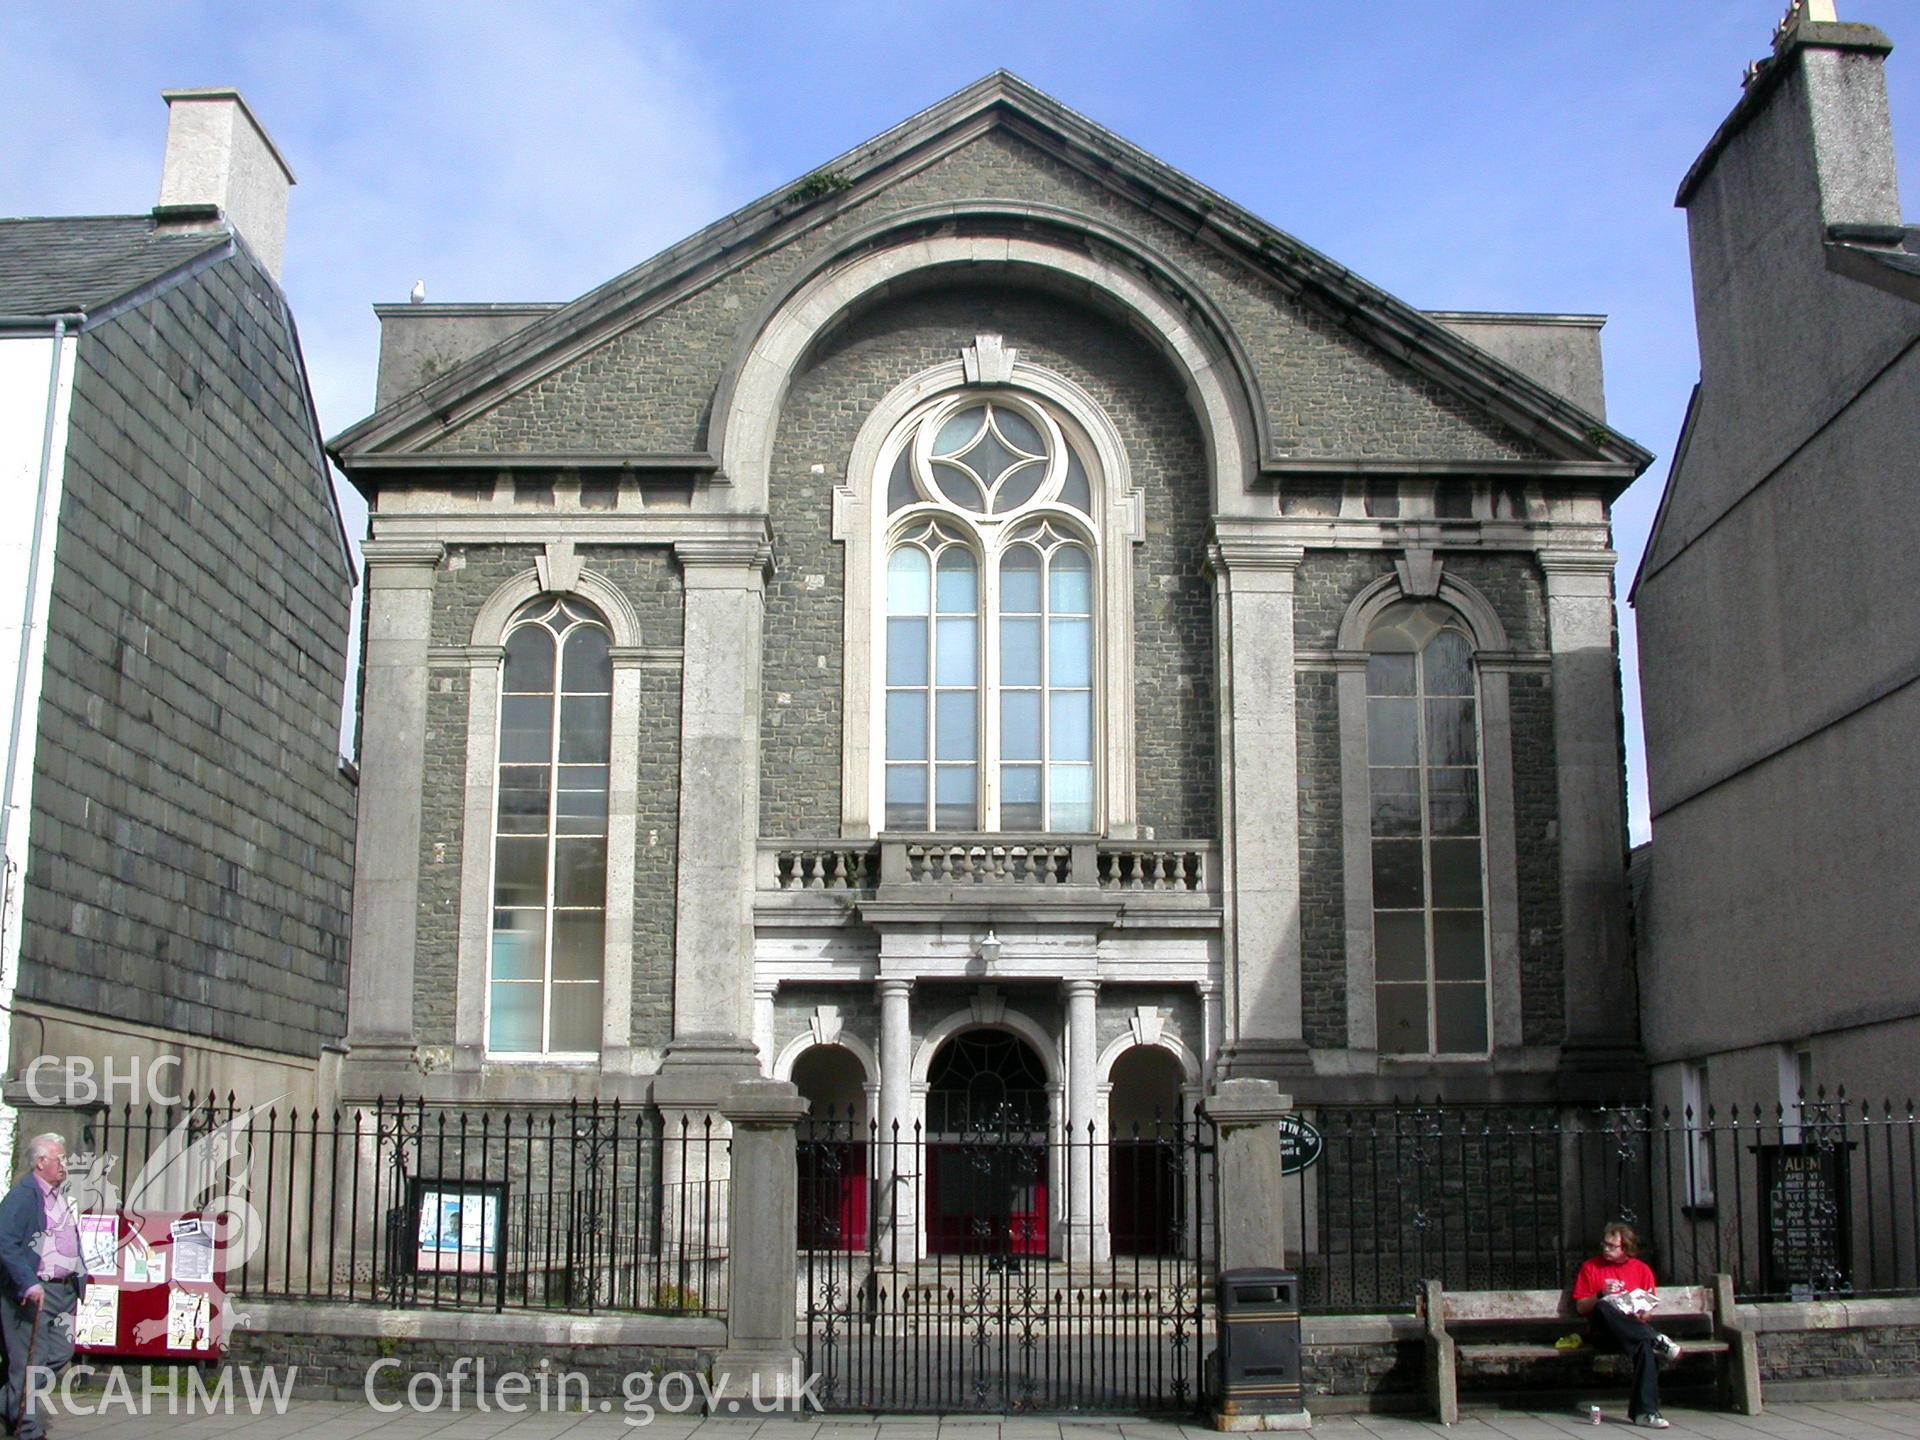 Colour digital photograph of Salem Welsh Independent Chapel, High Street, Porthmadog, Stephen Hughes, 03/04/2004.